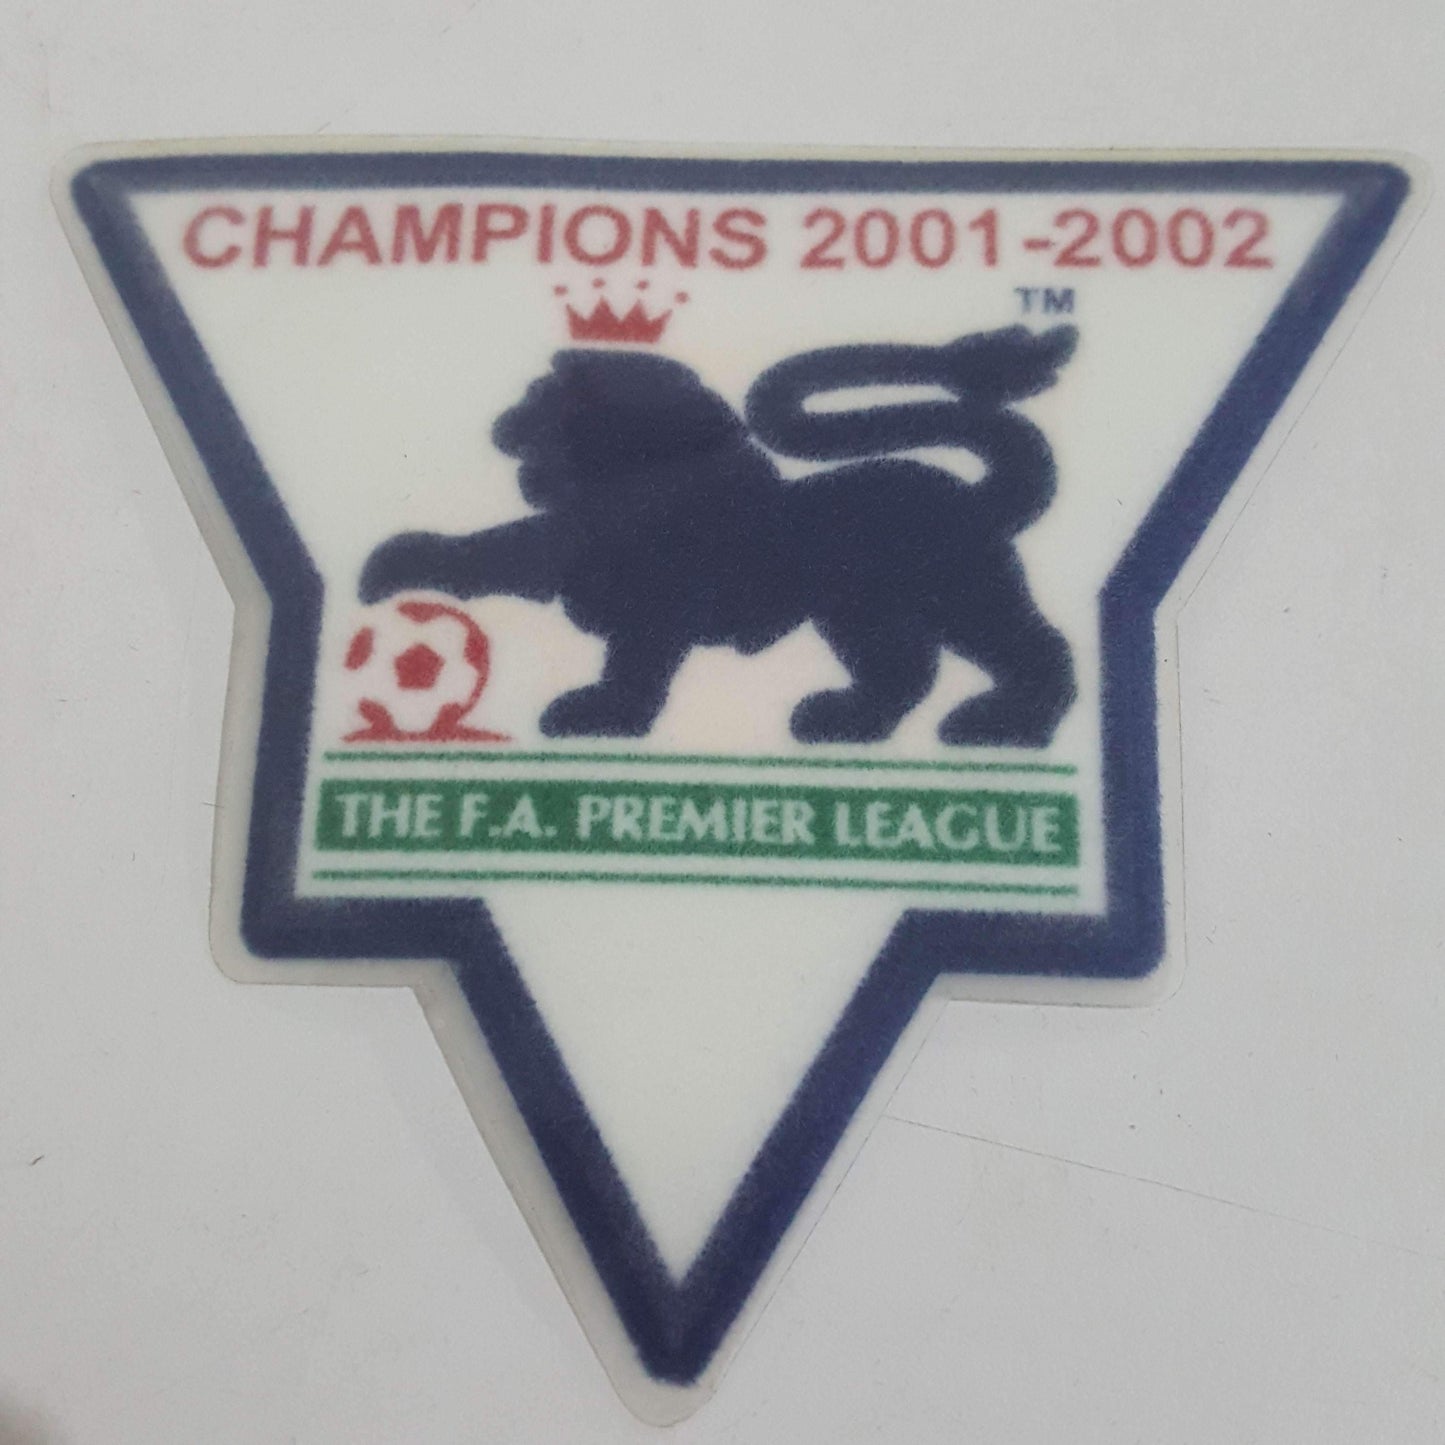 2001/02 F.A Premier League Champions Patch - ClassicFootballJersey